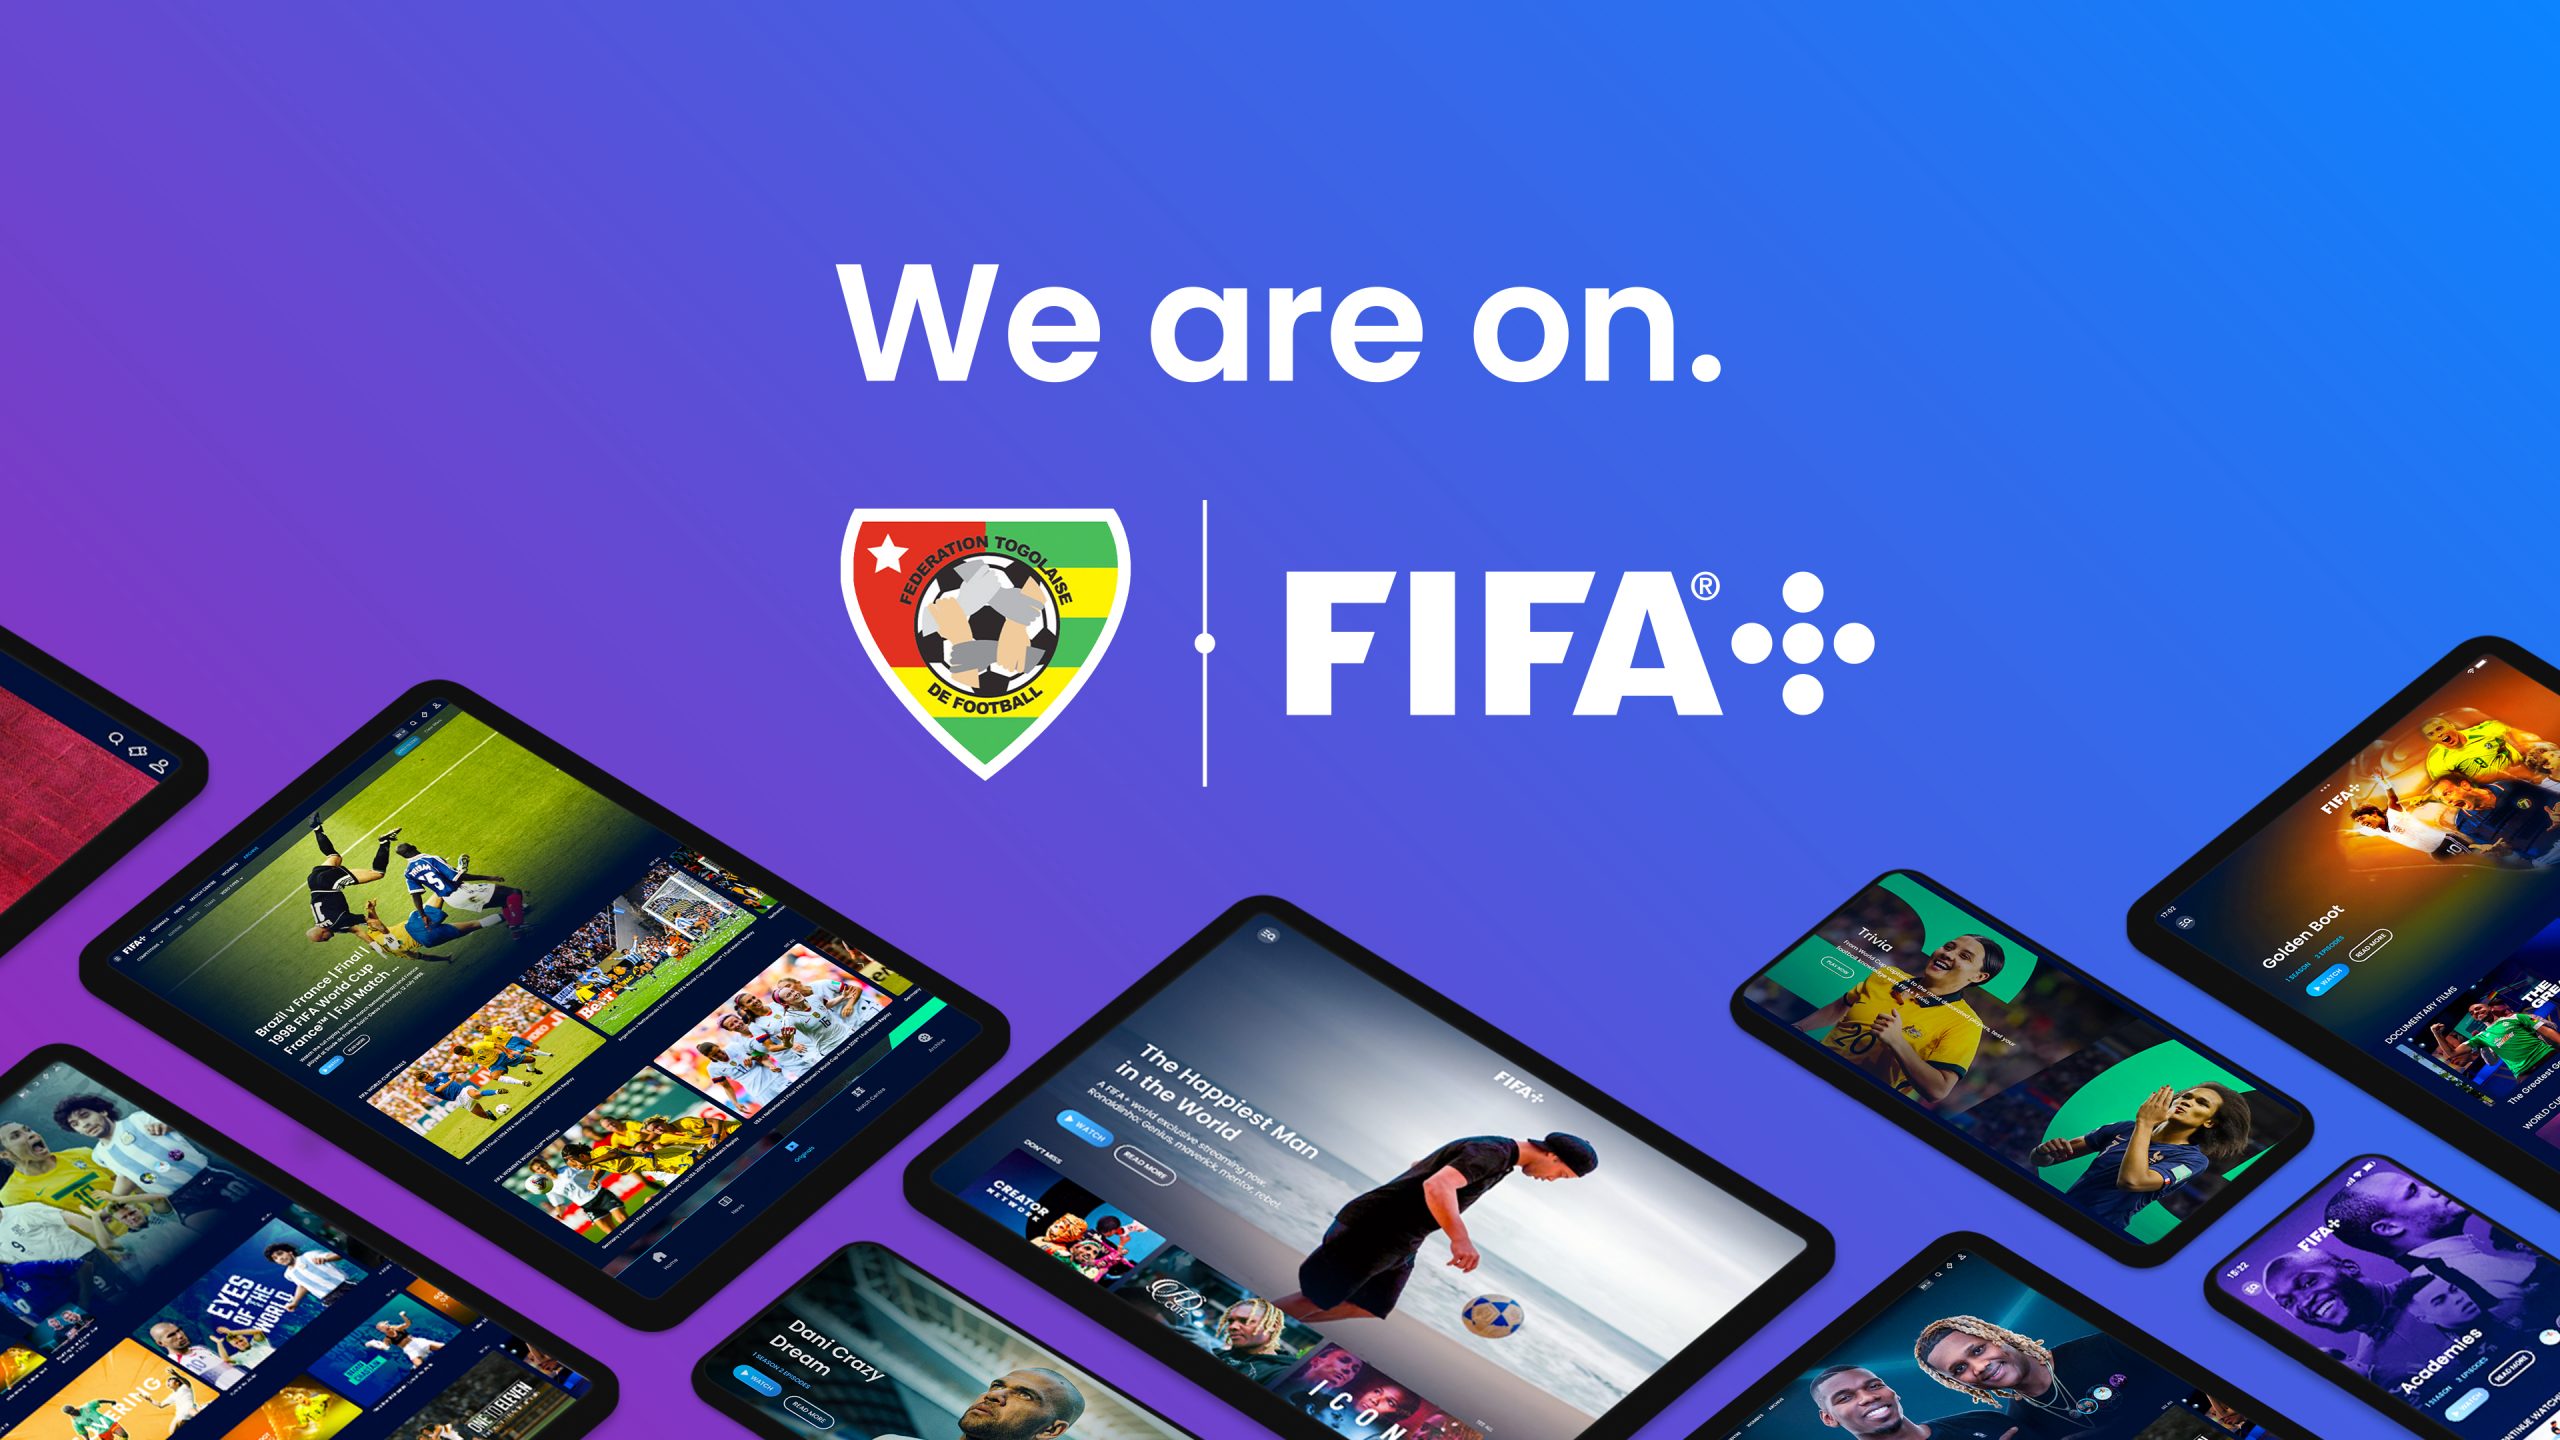 La FIFA lance sa plateforme de streaming FIFA+ avec des matchs en